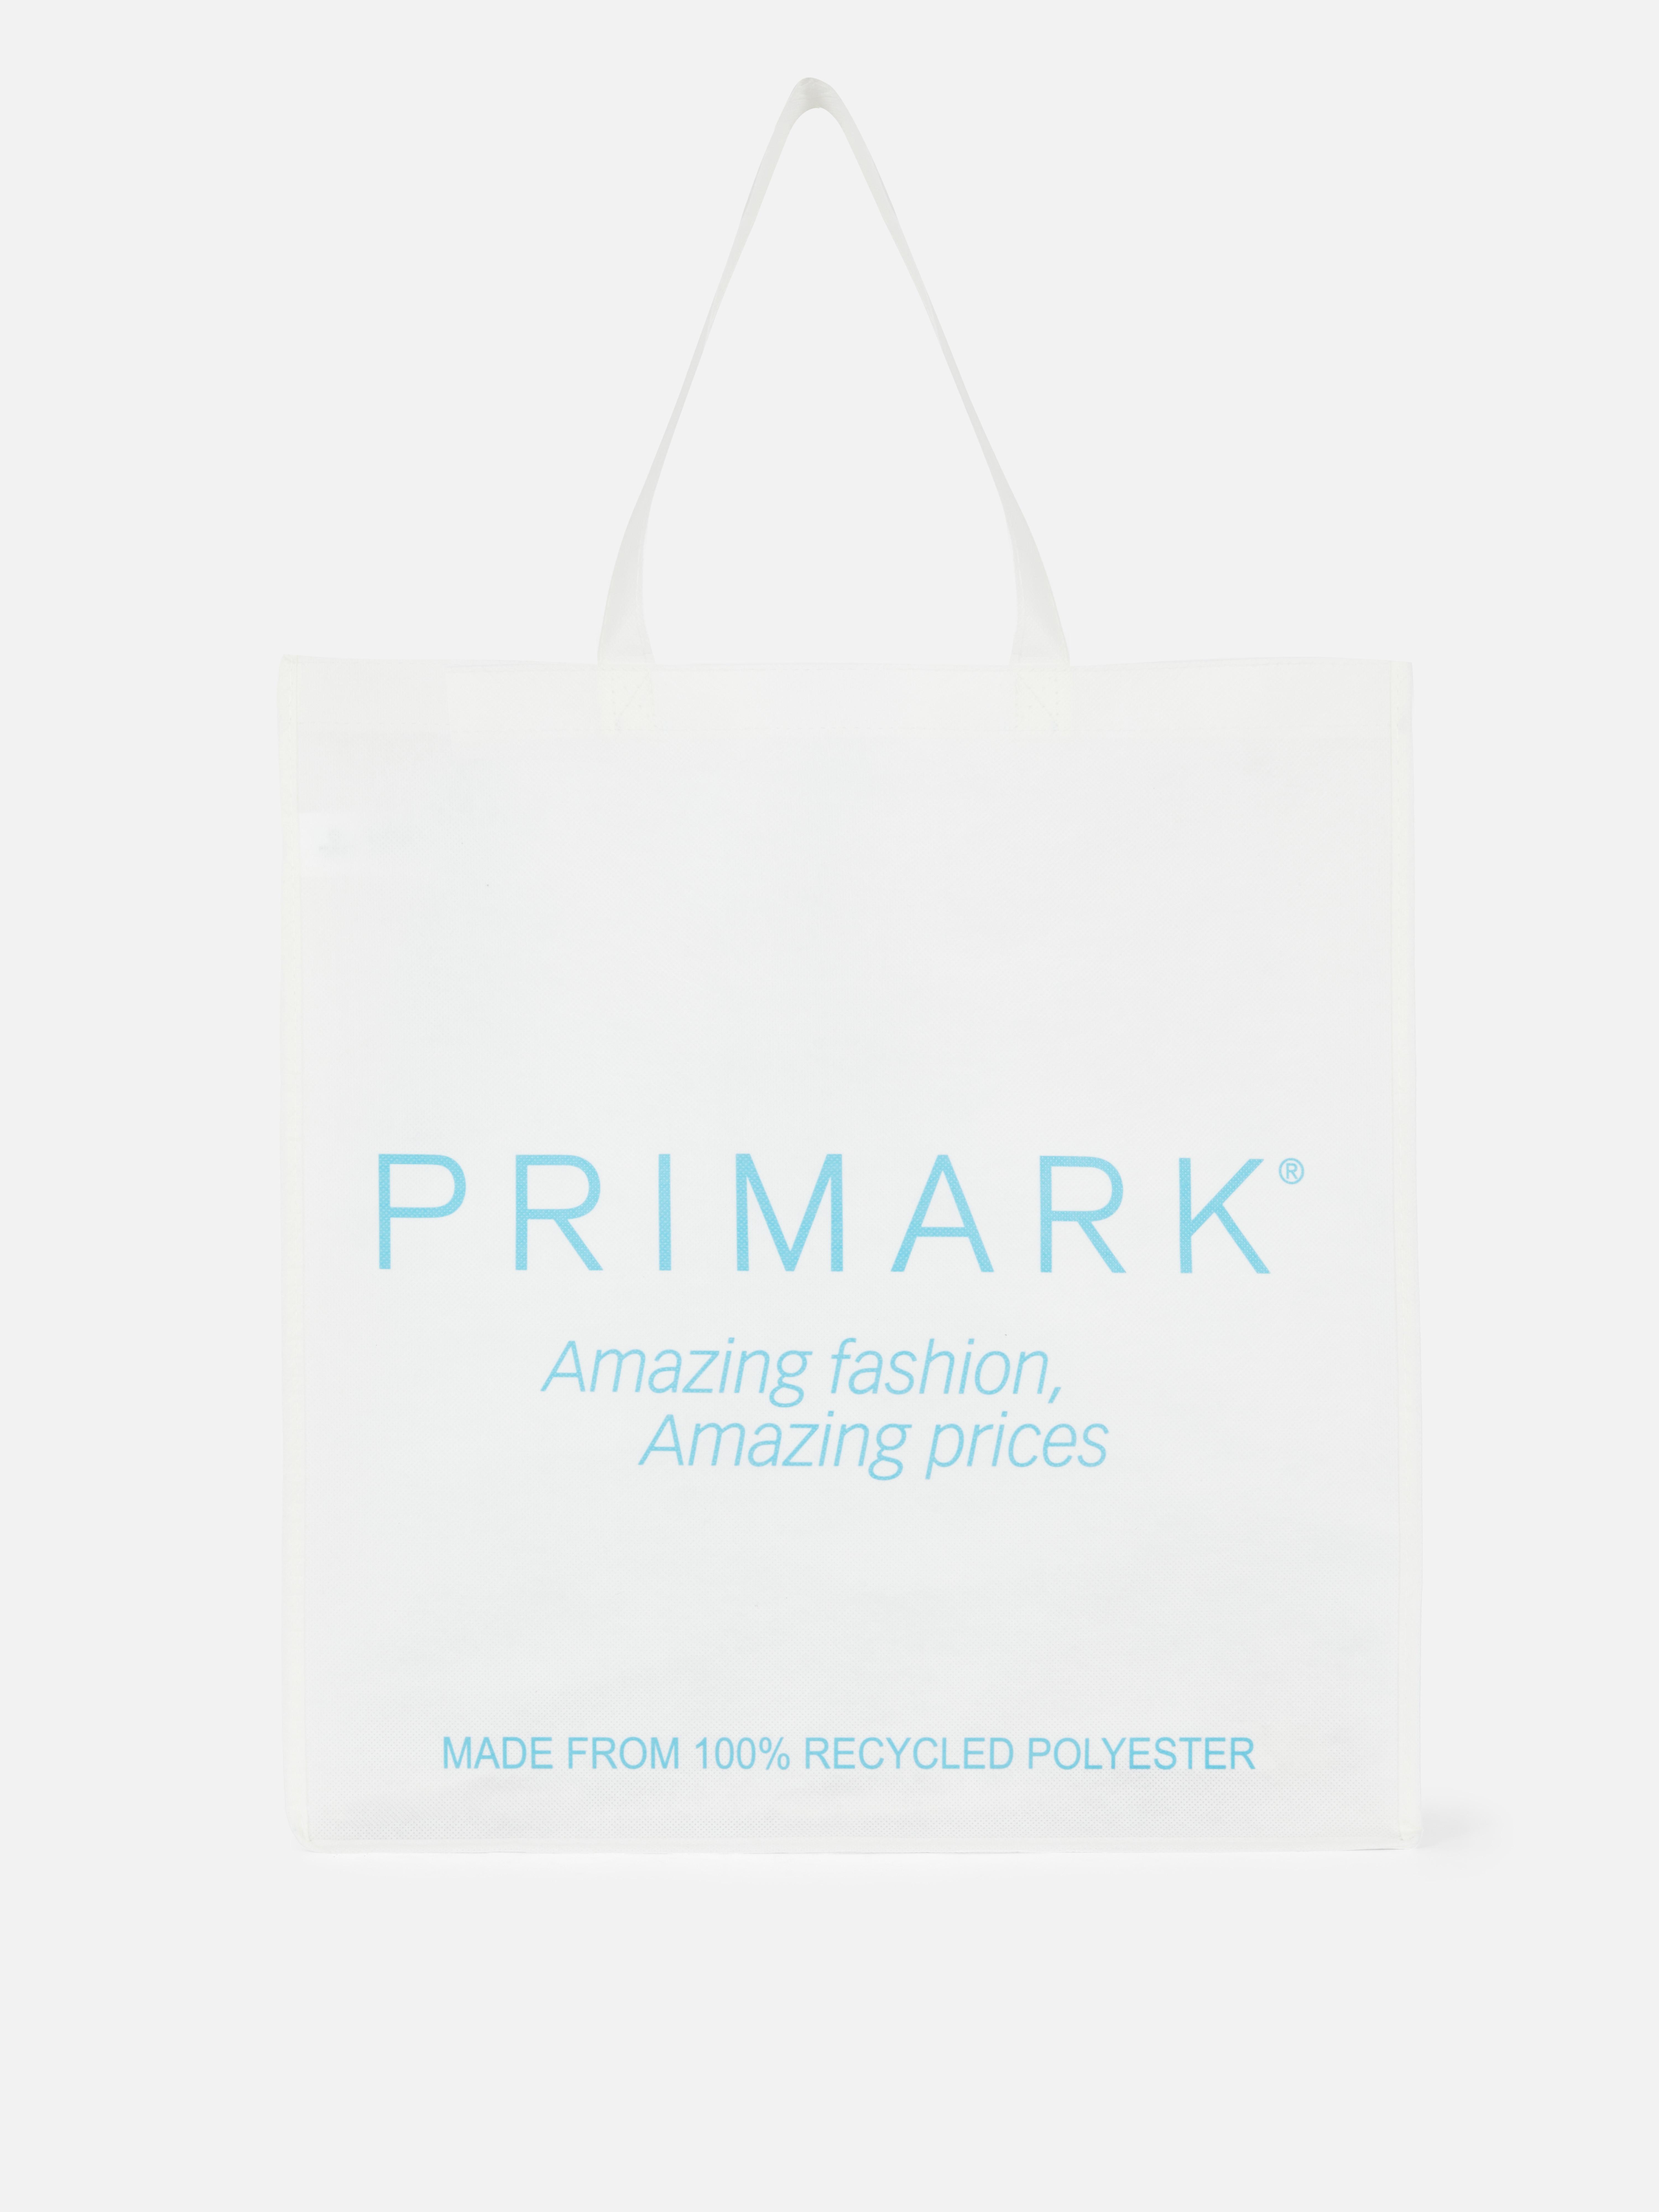 Primark Large Reusable Bag